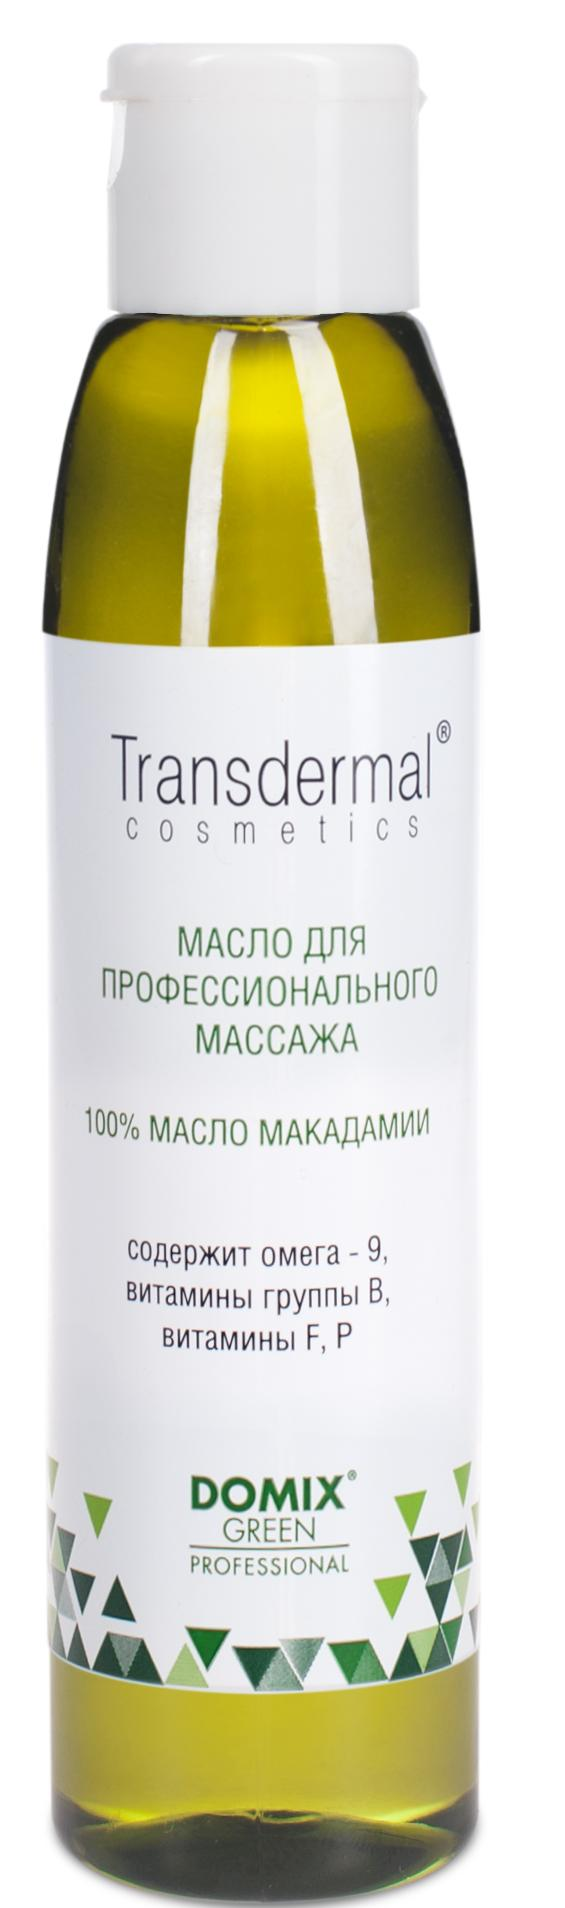 DOMIX Масло макадамии, без отдушек / TRANSDERMAL COSMETICS 136 мл domix transdermal cosmetics для профессионального массажа 1% масло сафлоровое 510 0